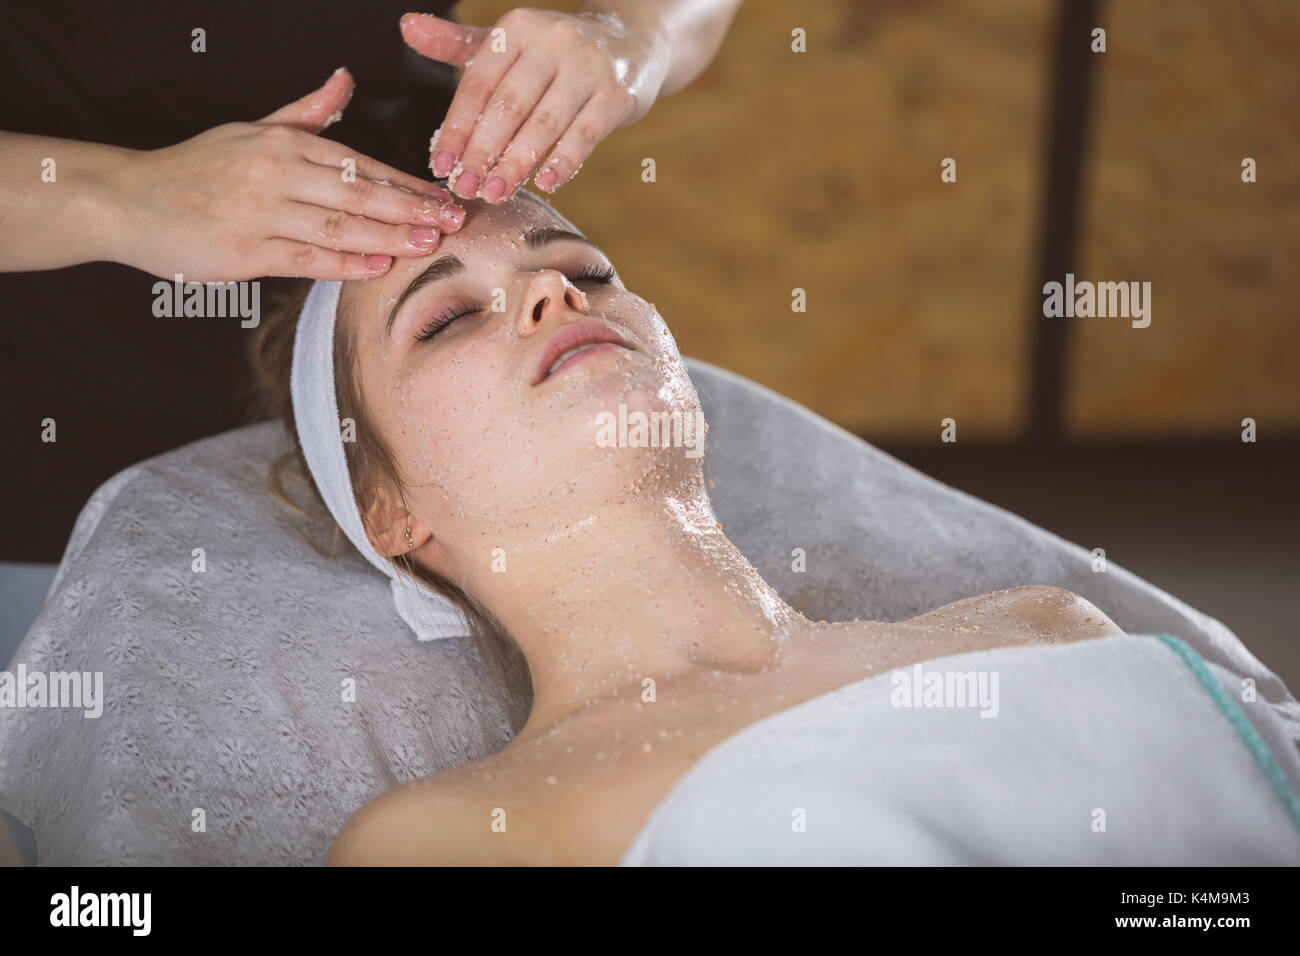 Beautician applying exfoliating salt scrub on woman's face Stock Photo